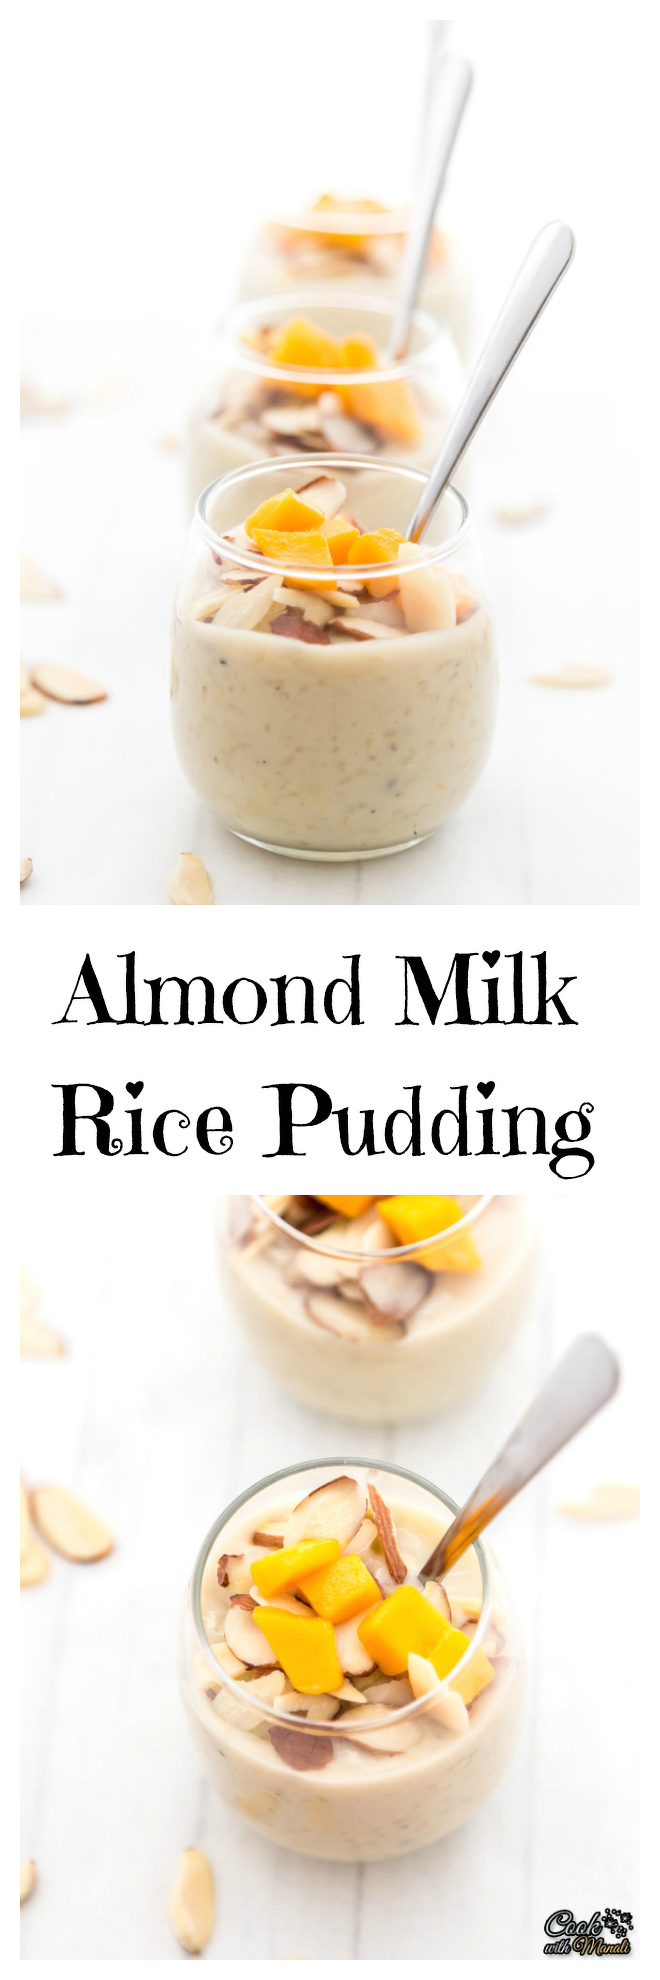 Almond Milk Rice Pudding Collage-nocwm